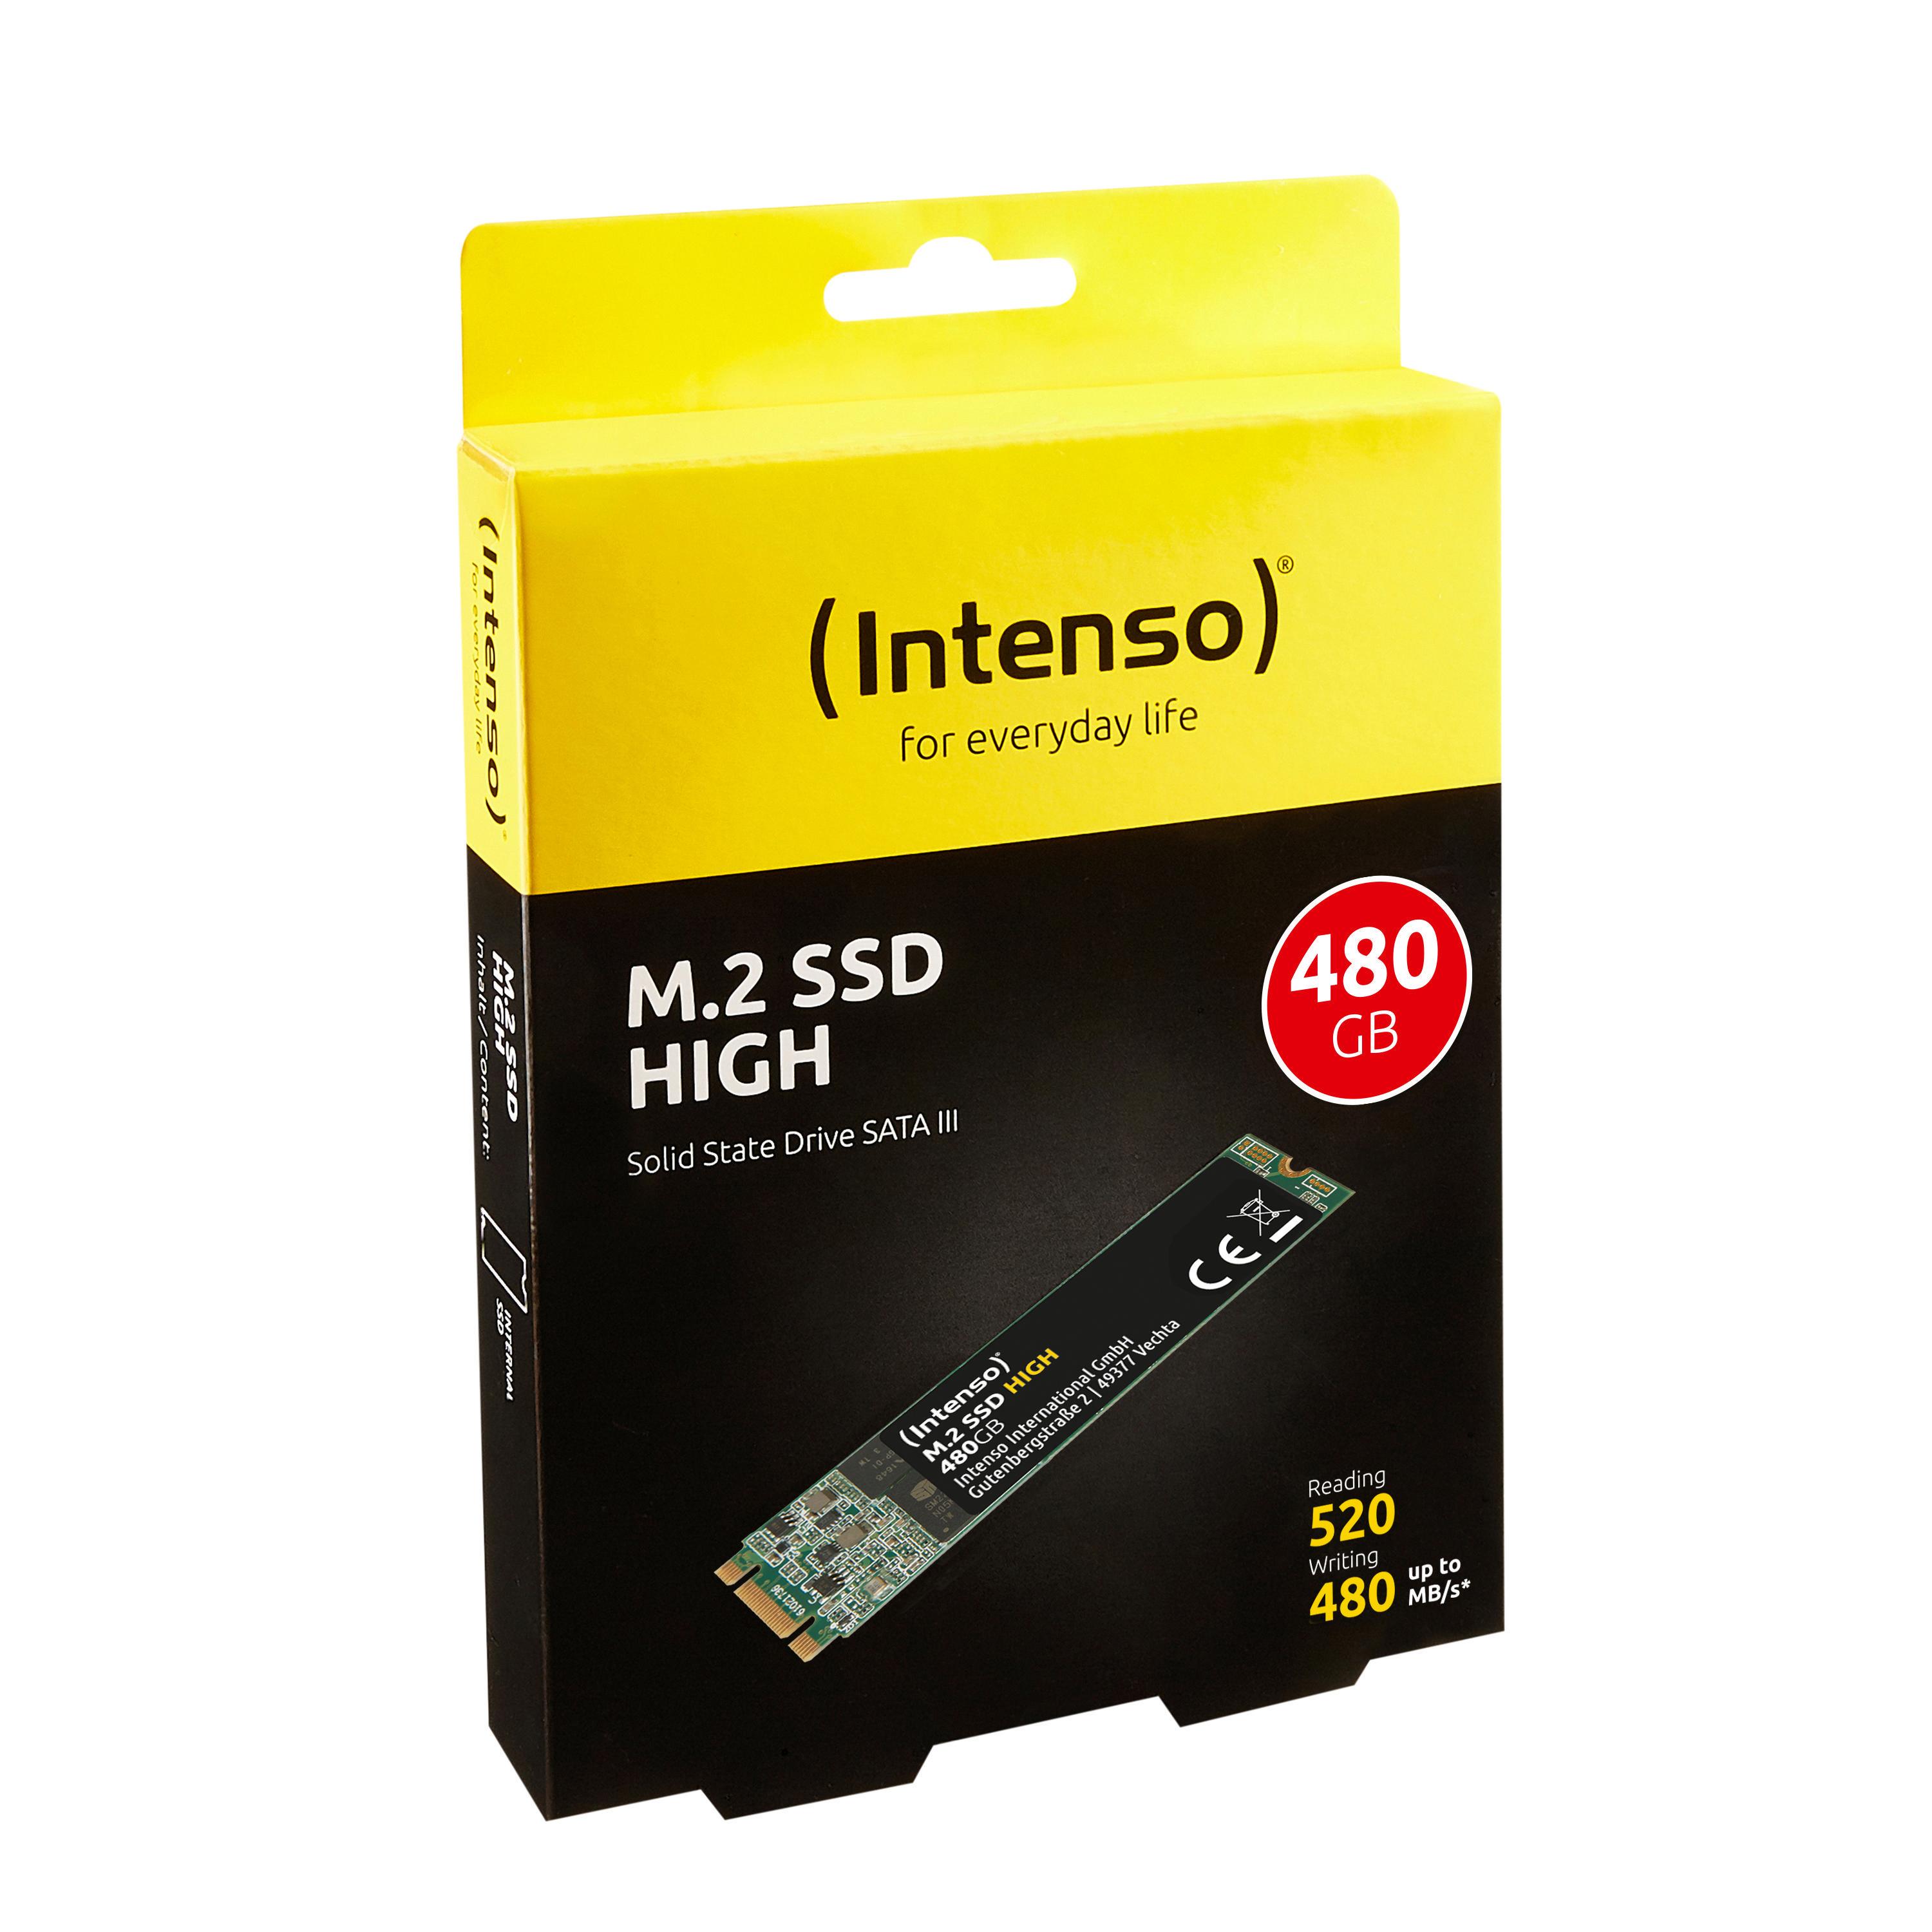 Festplatte GB 480 6 mSSD intern INTENSO Retail, Gbps, Performance High SATA